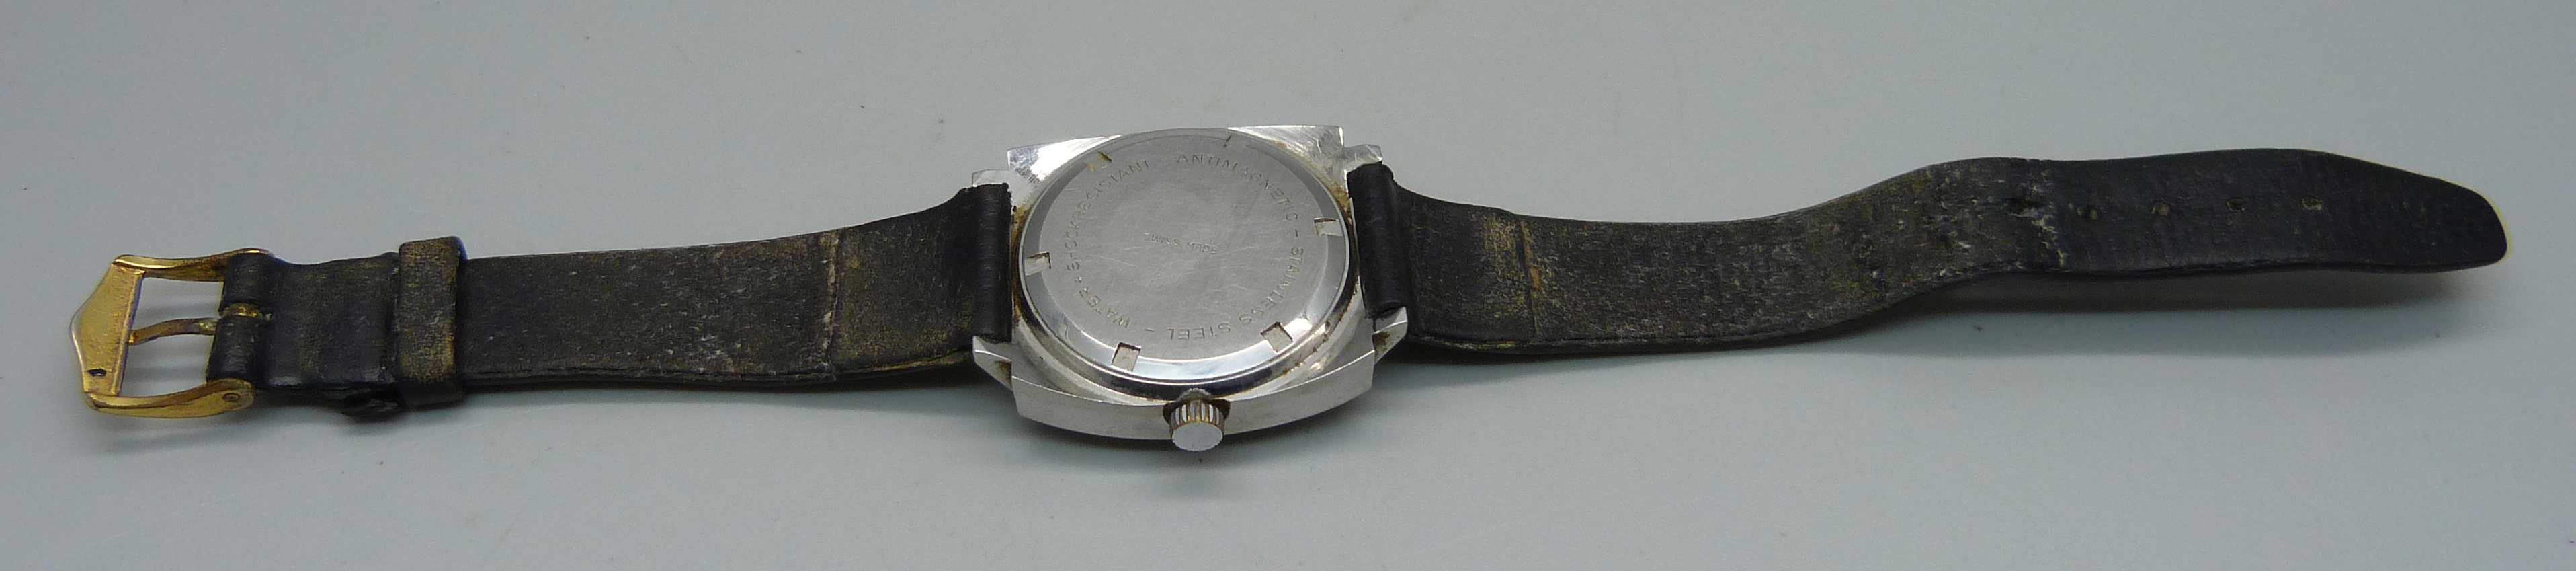 A 1970's Baylor Norseman, Swiss made, 17 jewel movement wristwatch - Image 6 of 7